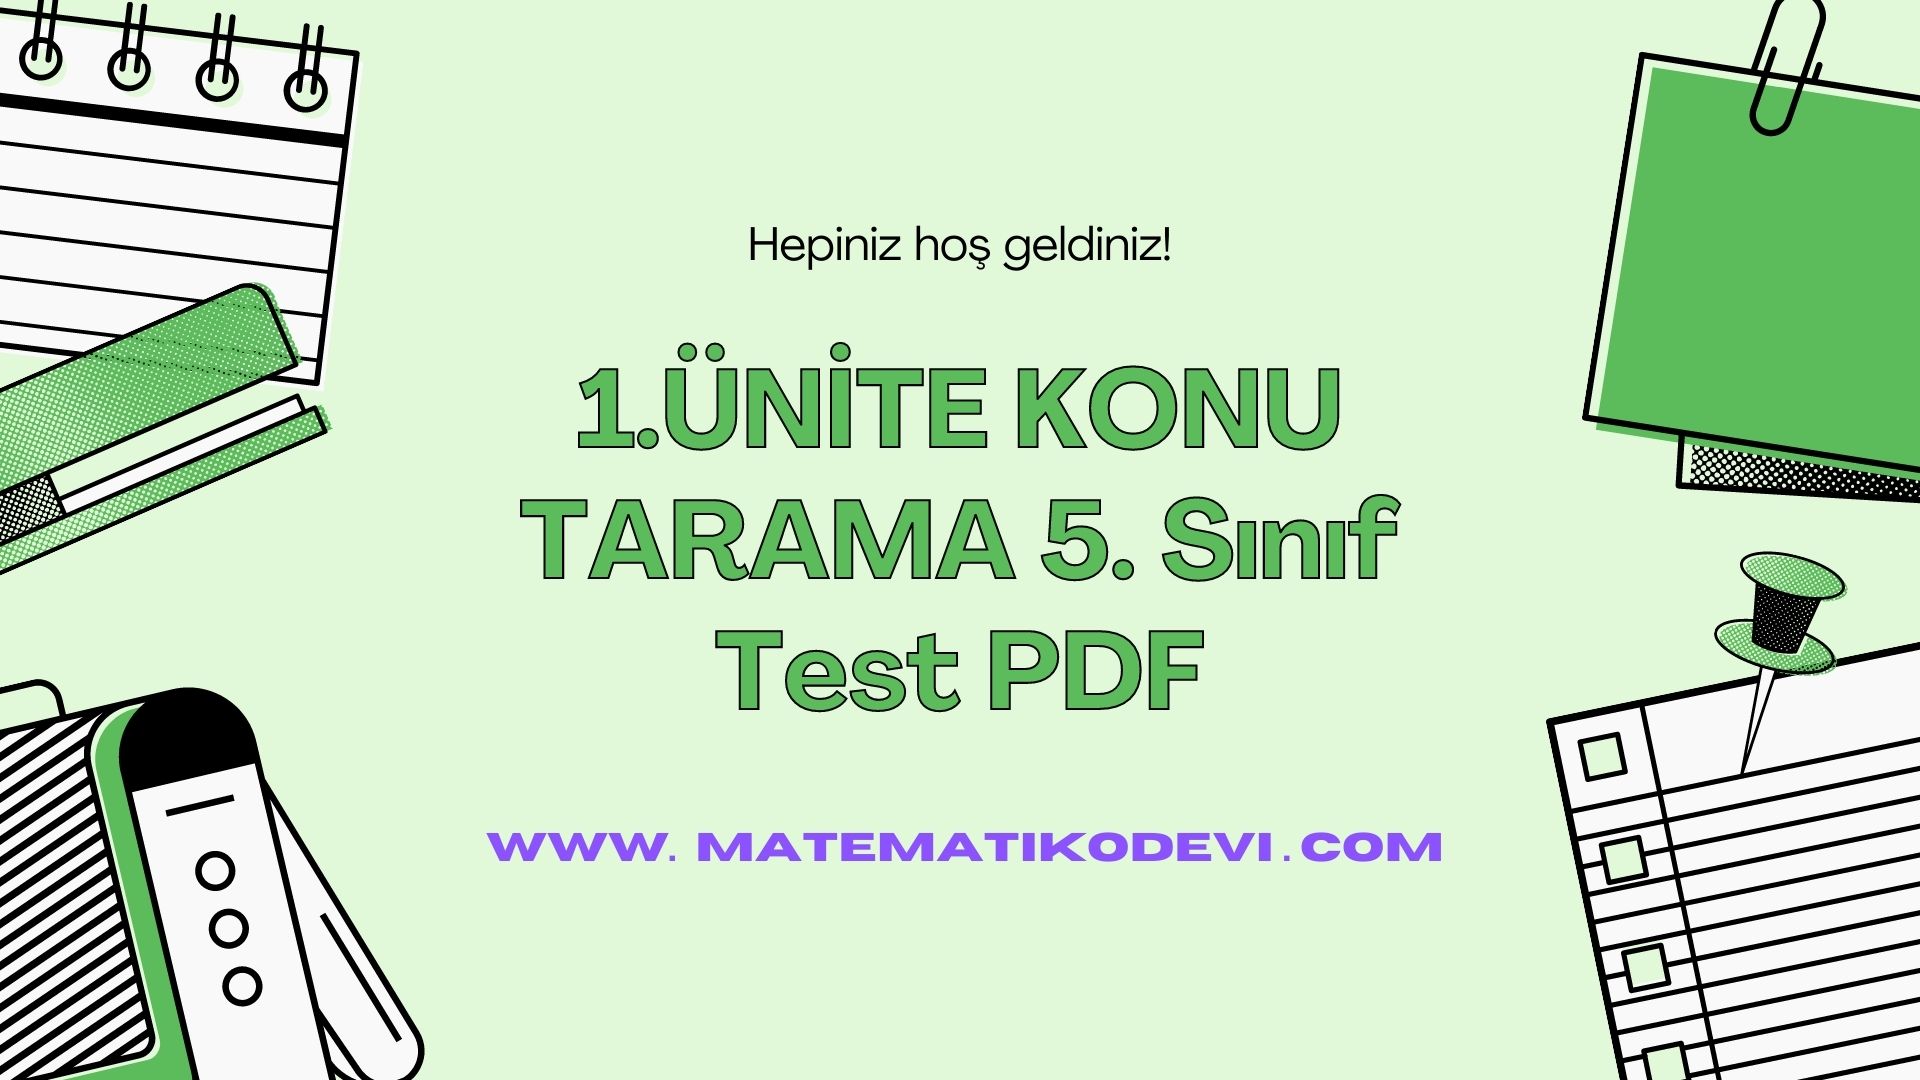 1.UNITE KONU TARAMA 5. Sinif Test PDF